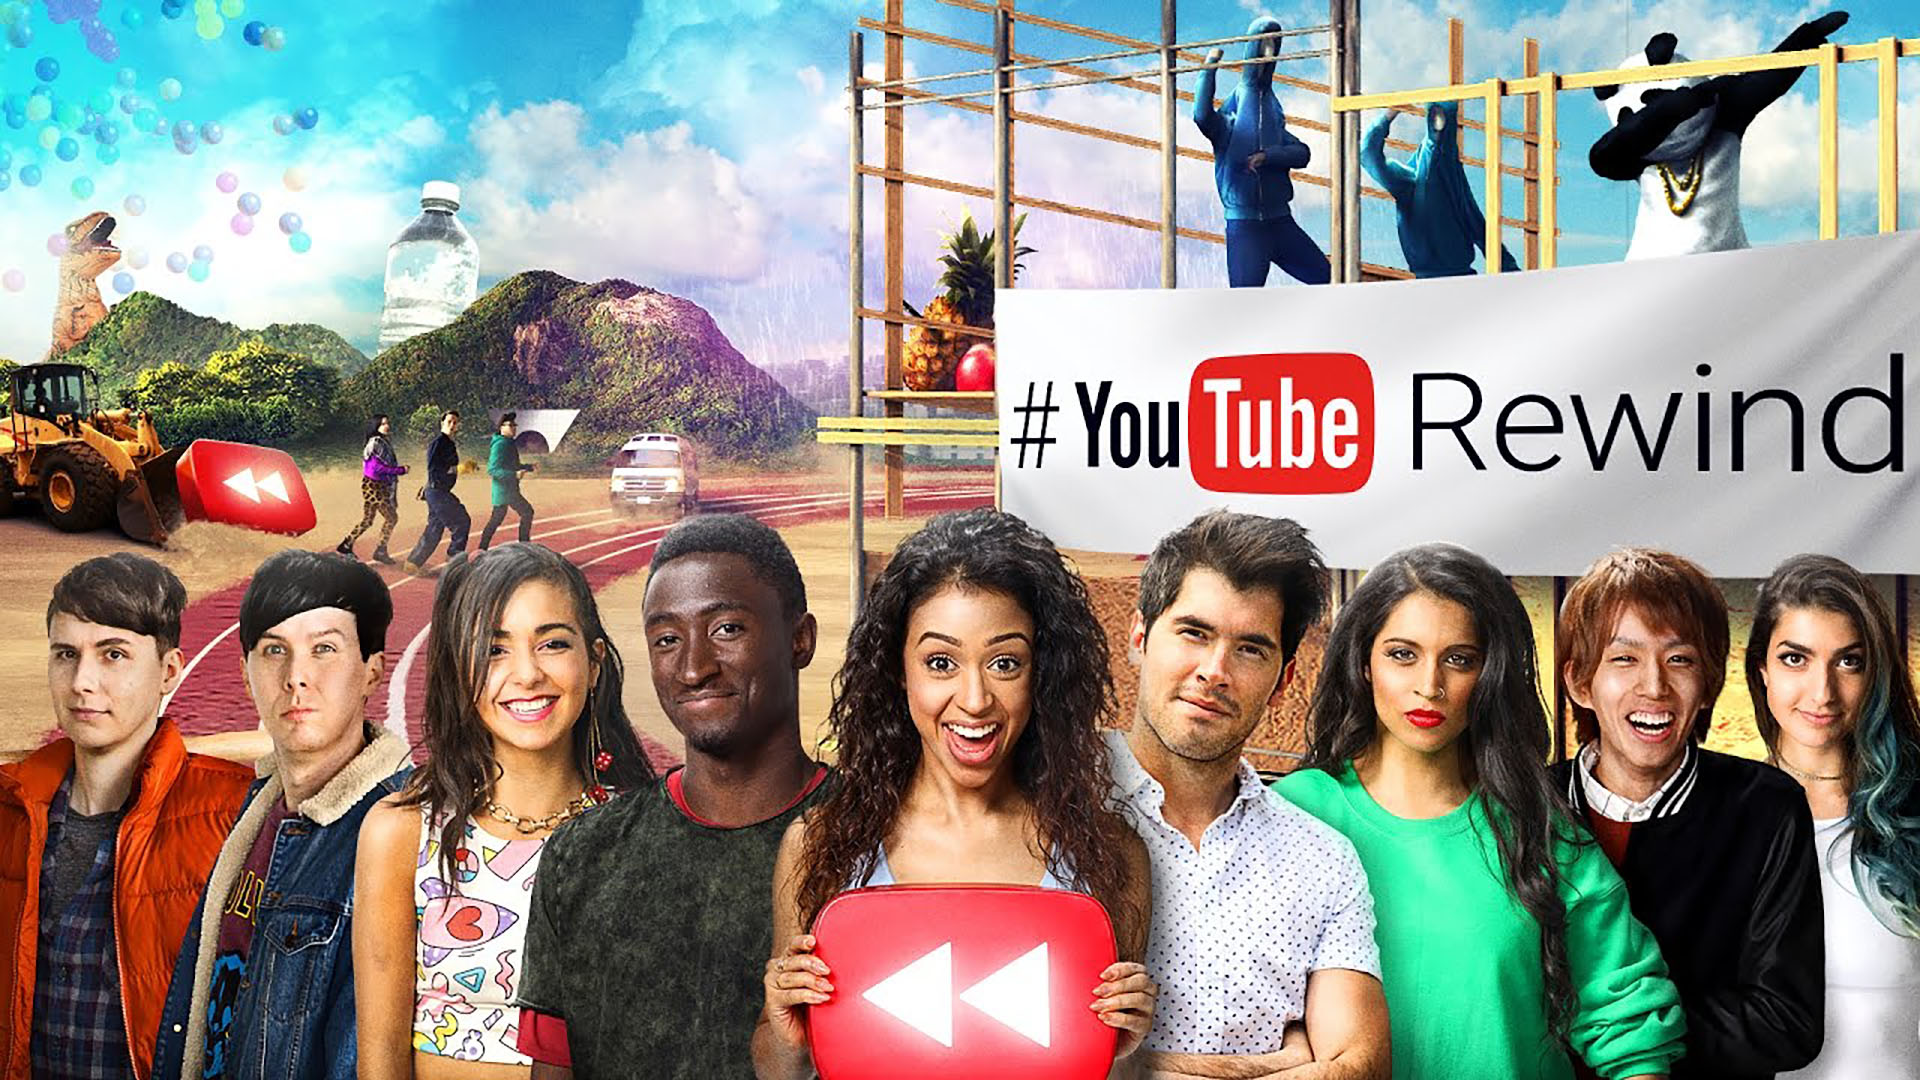 Le YouTube Rewind 2020 annulé à cause de la Covid-19